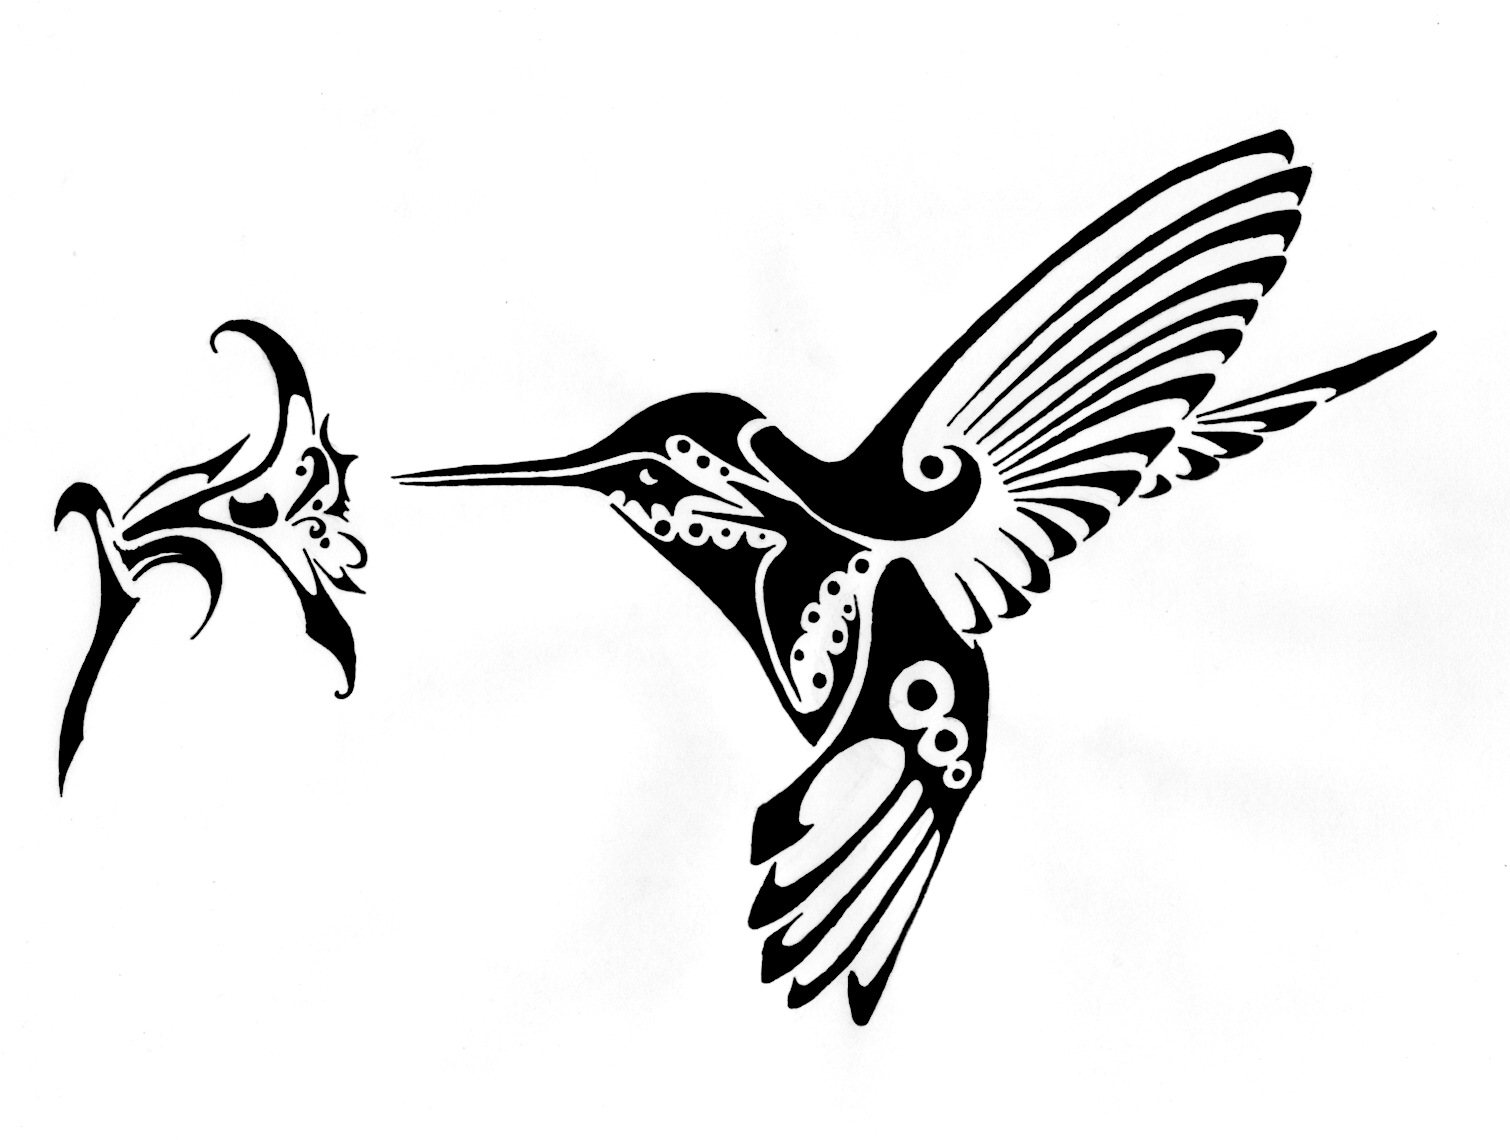 Hummingbird clipart black and white, Hummingbird black and white